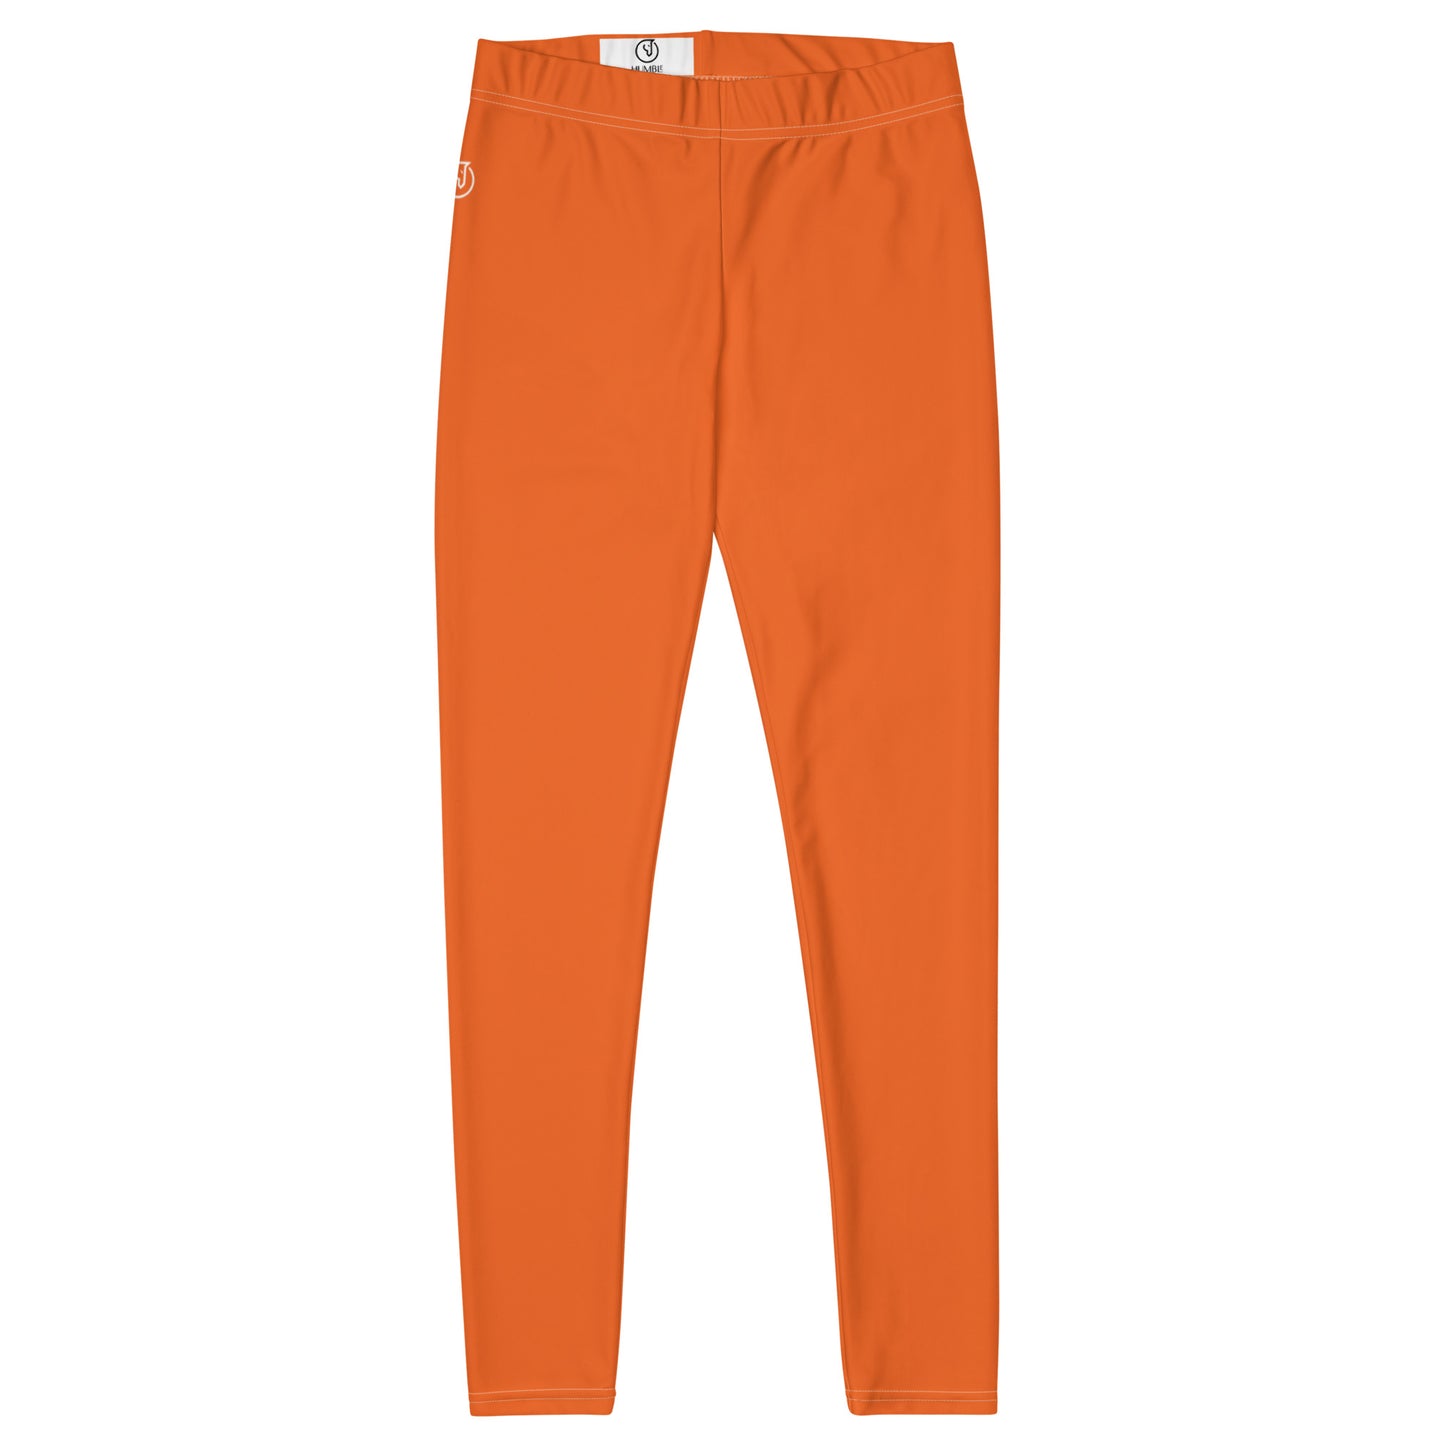 Humble Sportswear, women’s color match leggings, women’s spandex leggings, orange leggings